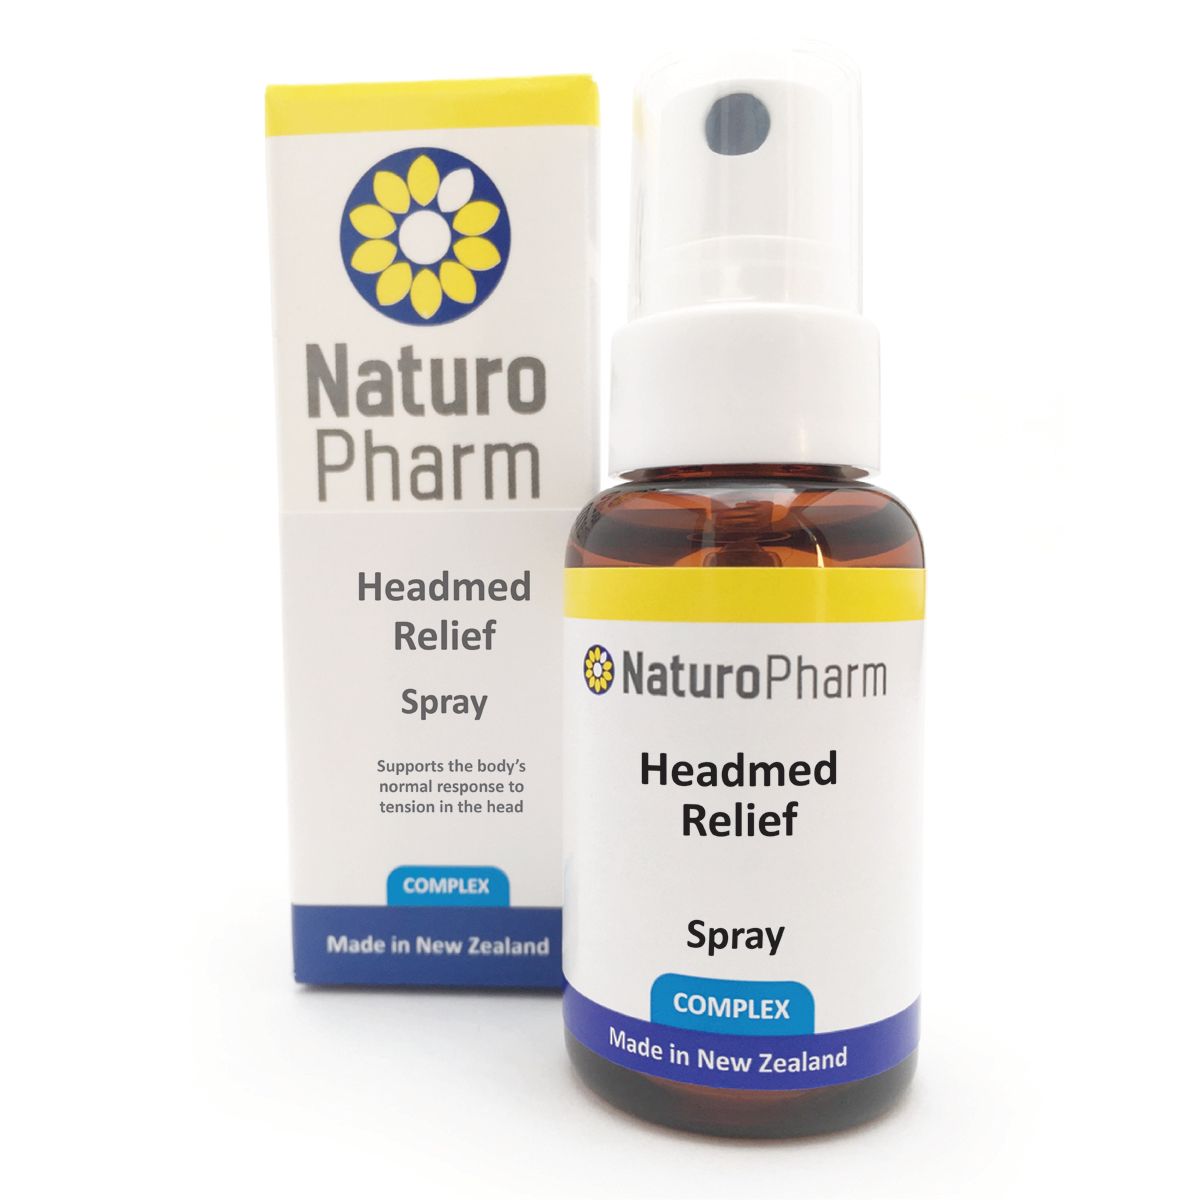 Naturo Pharm HeadMed Relief